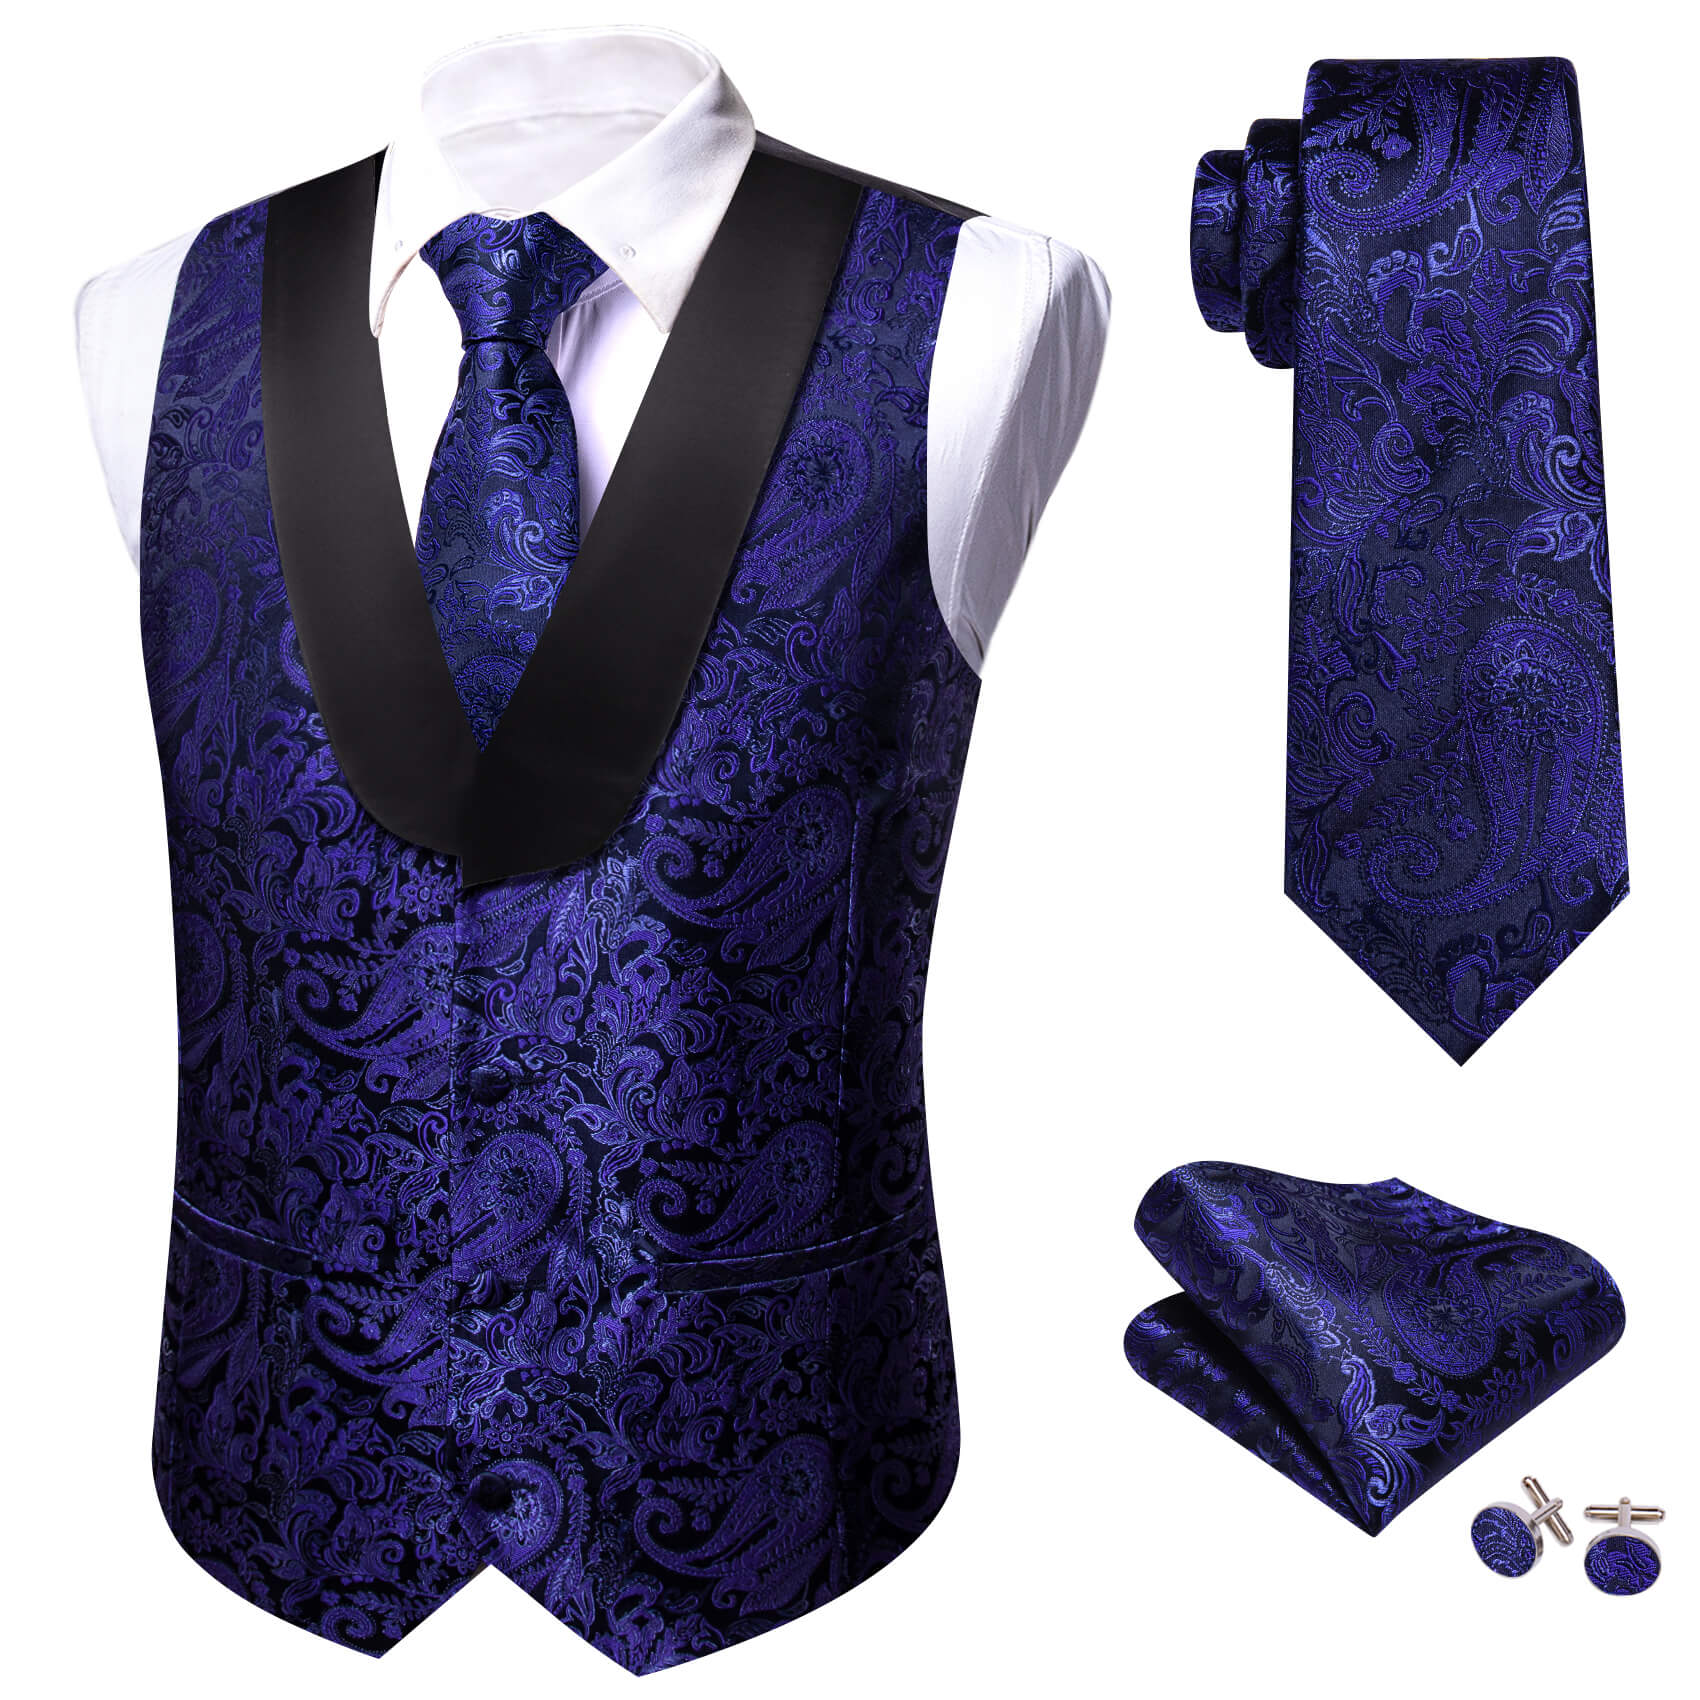 Barry.wang Vest for Men Navy Blue Paisley Shawl Collar Vest Tie Hanky Cufflinks Set